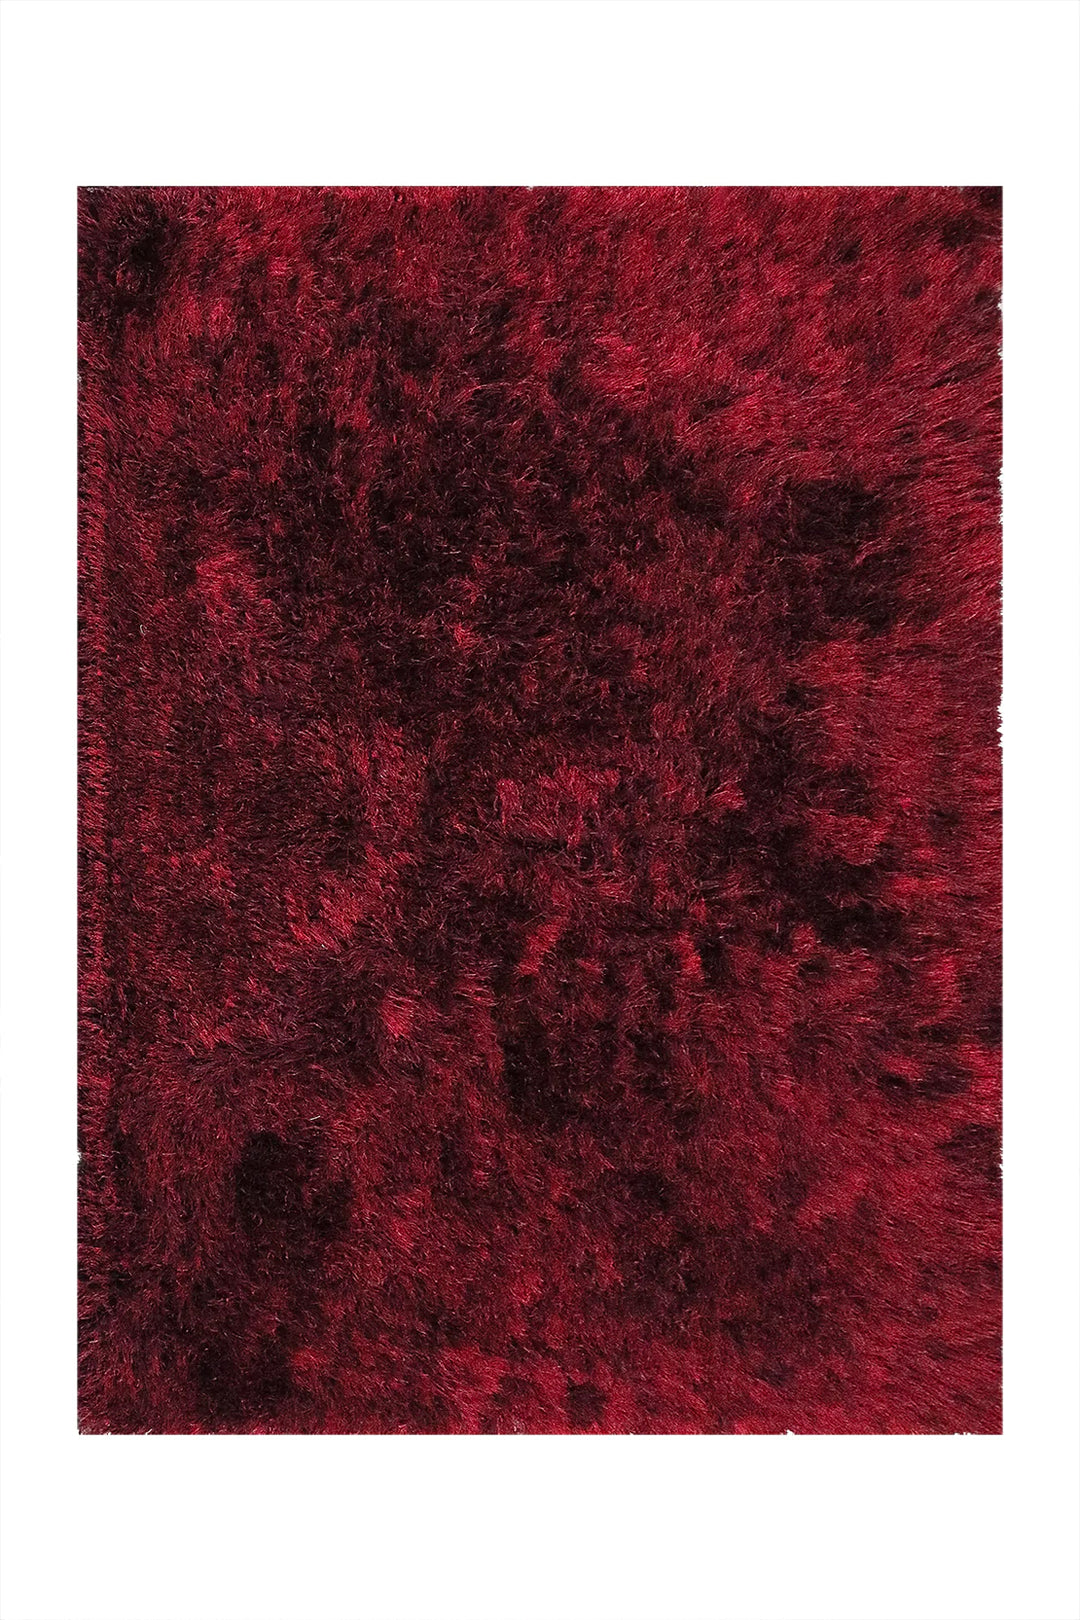 Turkish Plush and Soft  Heaven Shaggy Rug - Maroon - 6.5 x 9.3 FT - Fluffy Furry Floor Decor Rug Heaven Shaggy